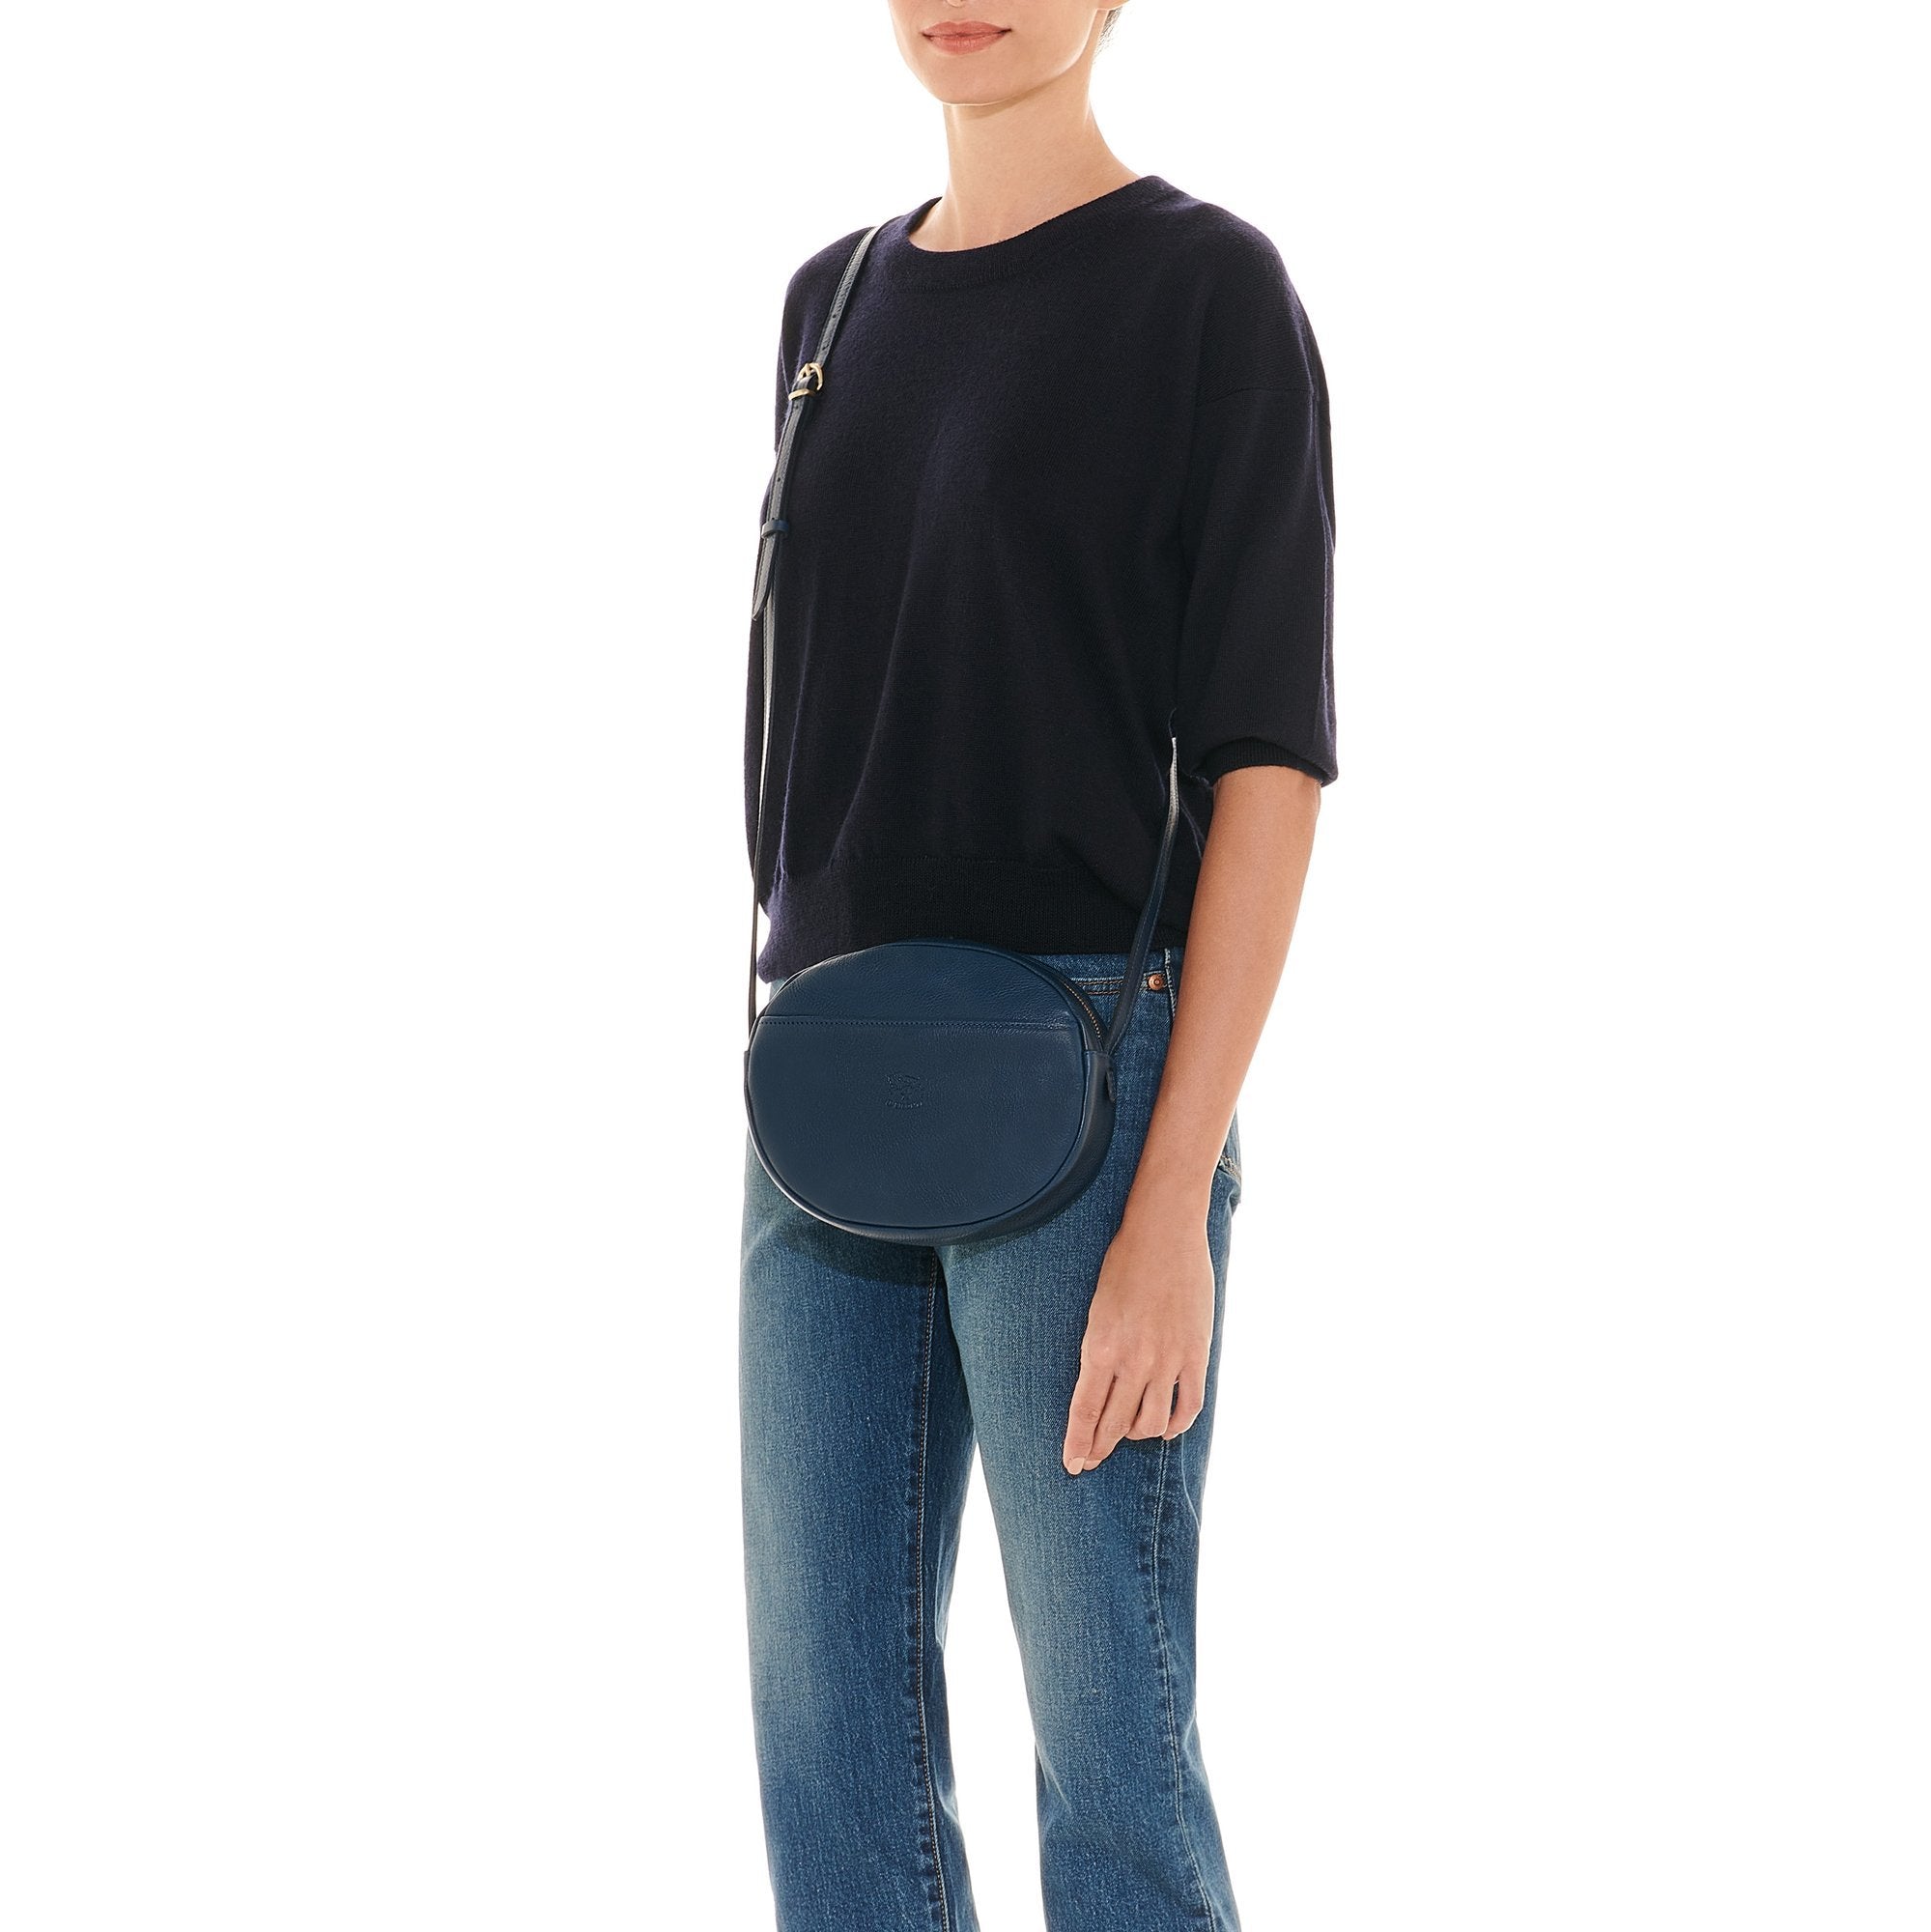 Rubino | Women's crossbody bag in leather color blue